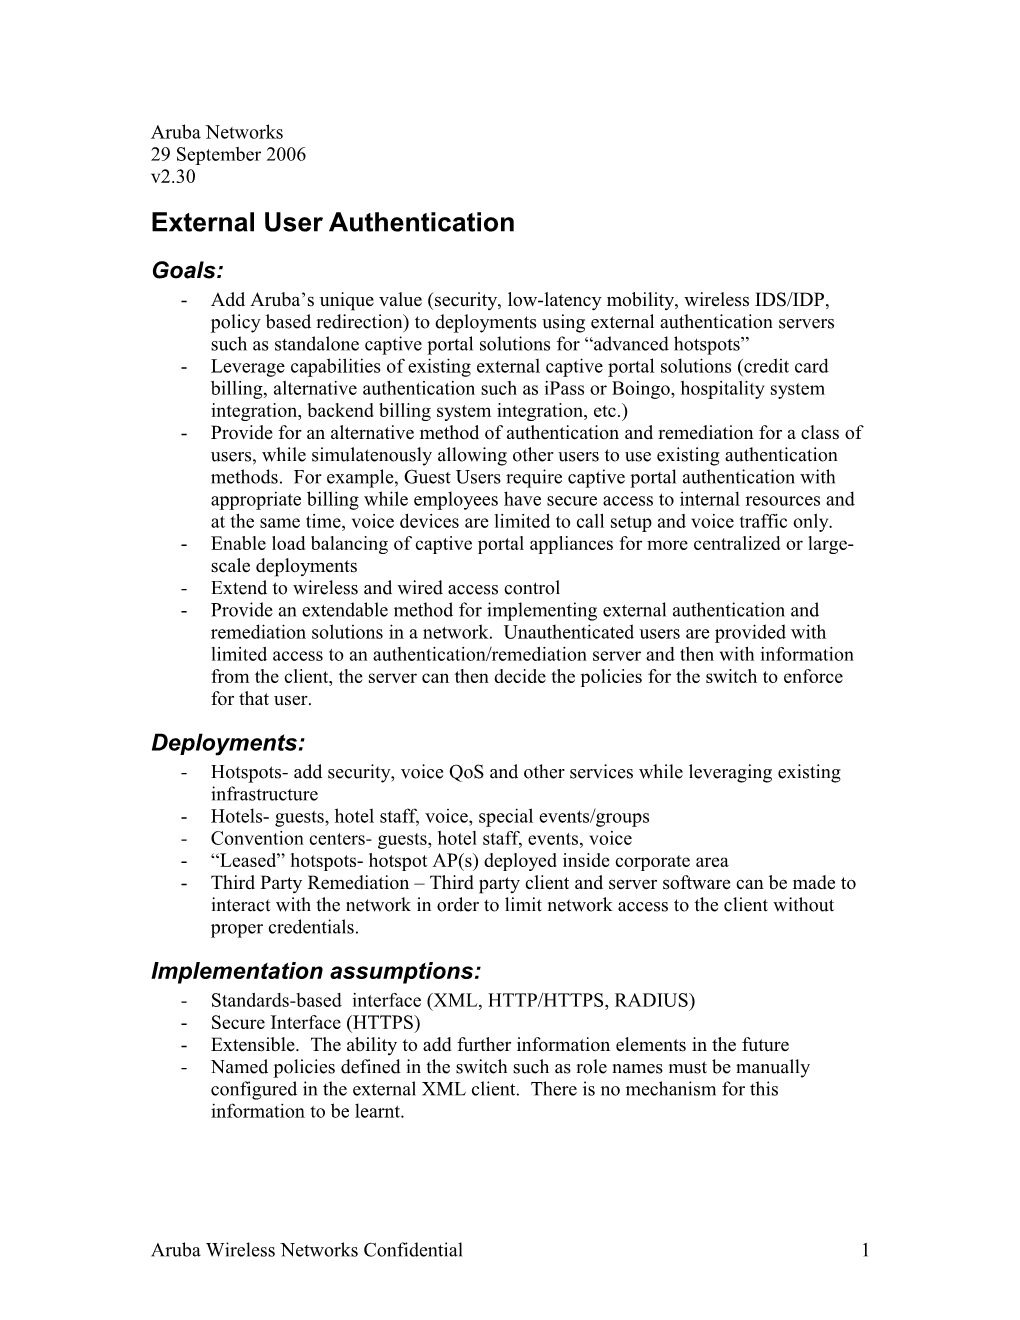 External User Authentication